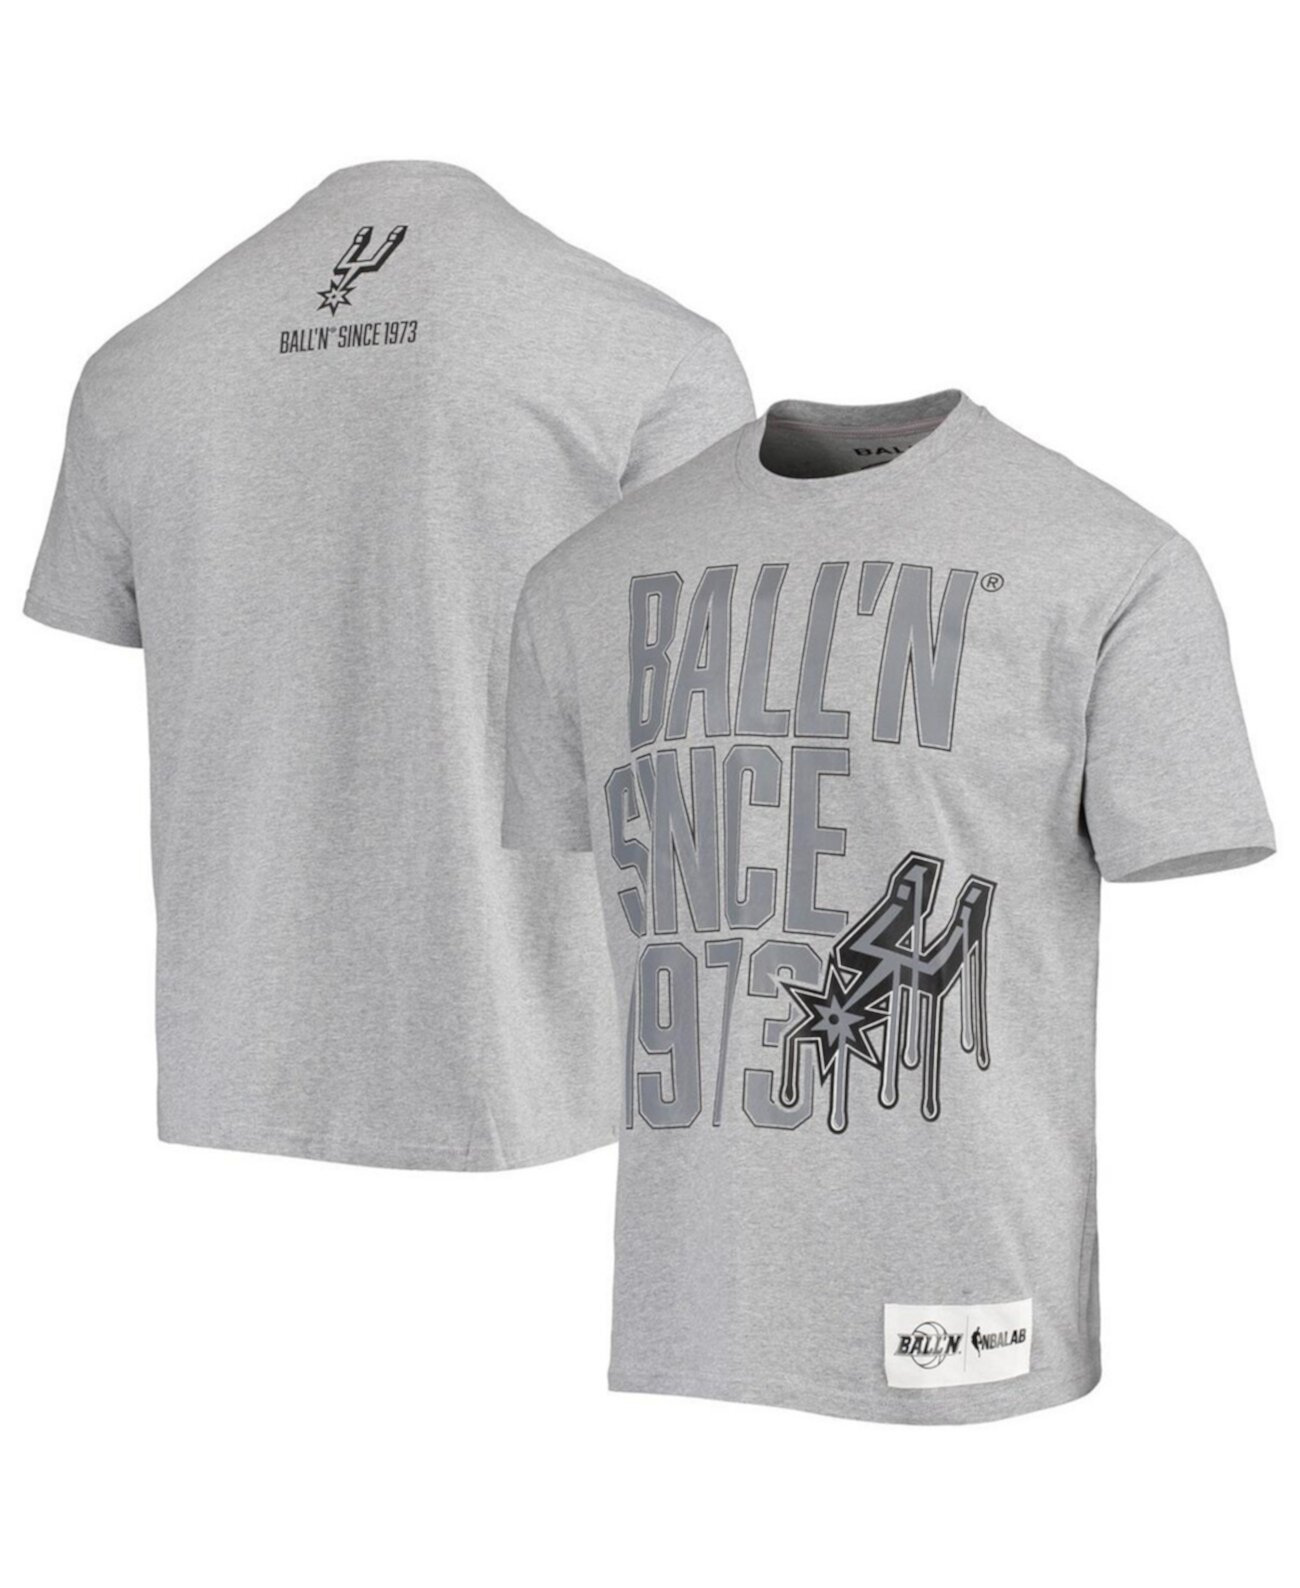 Мужская серая футболка San Antonio Spurs с 1973 года в мелкую клетку BALL'N